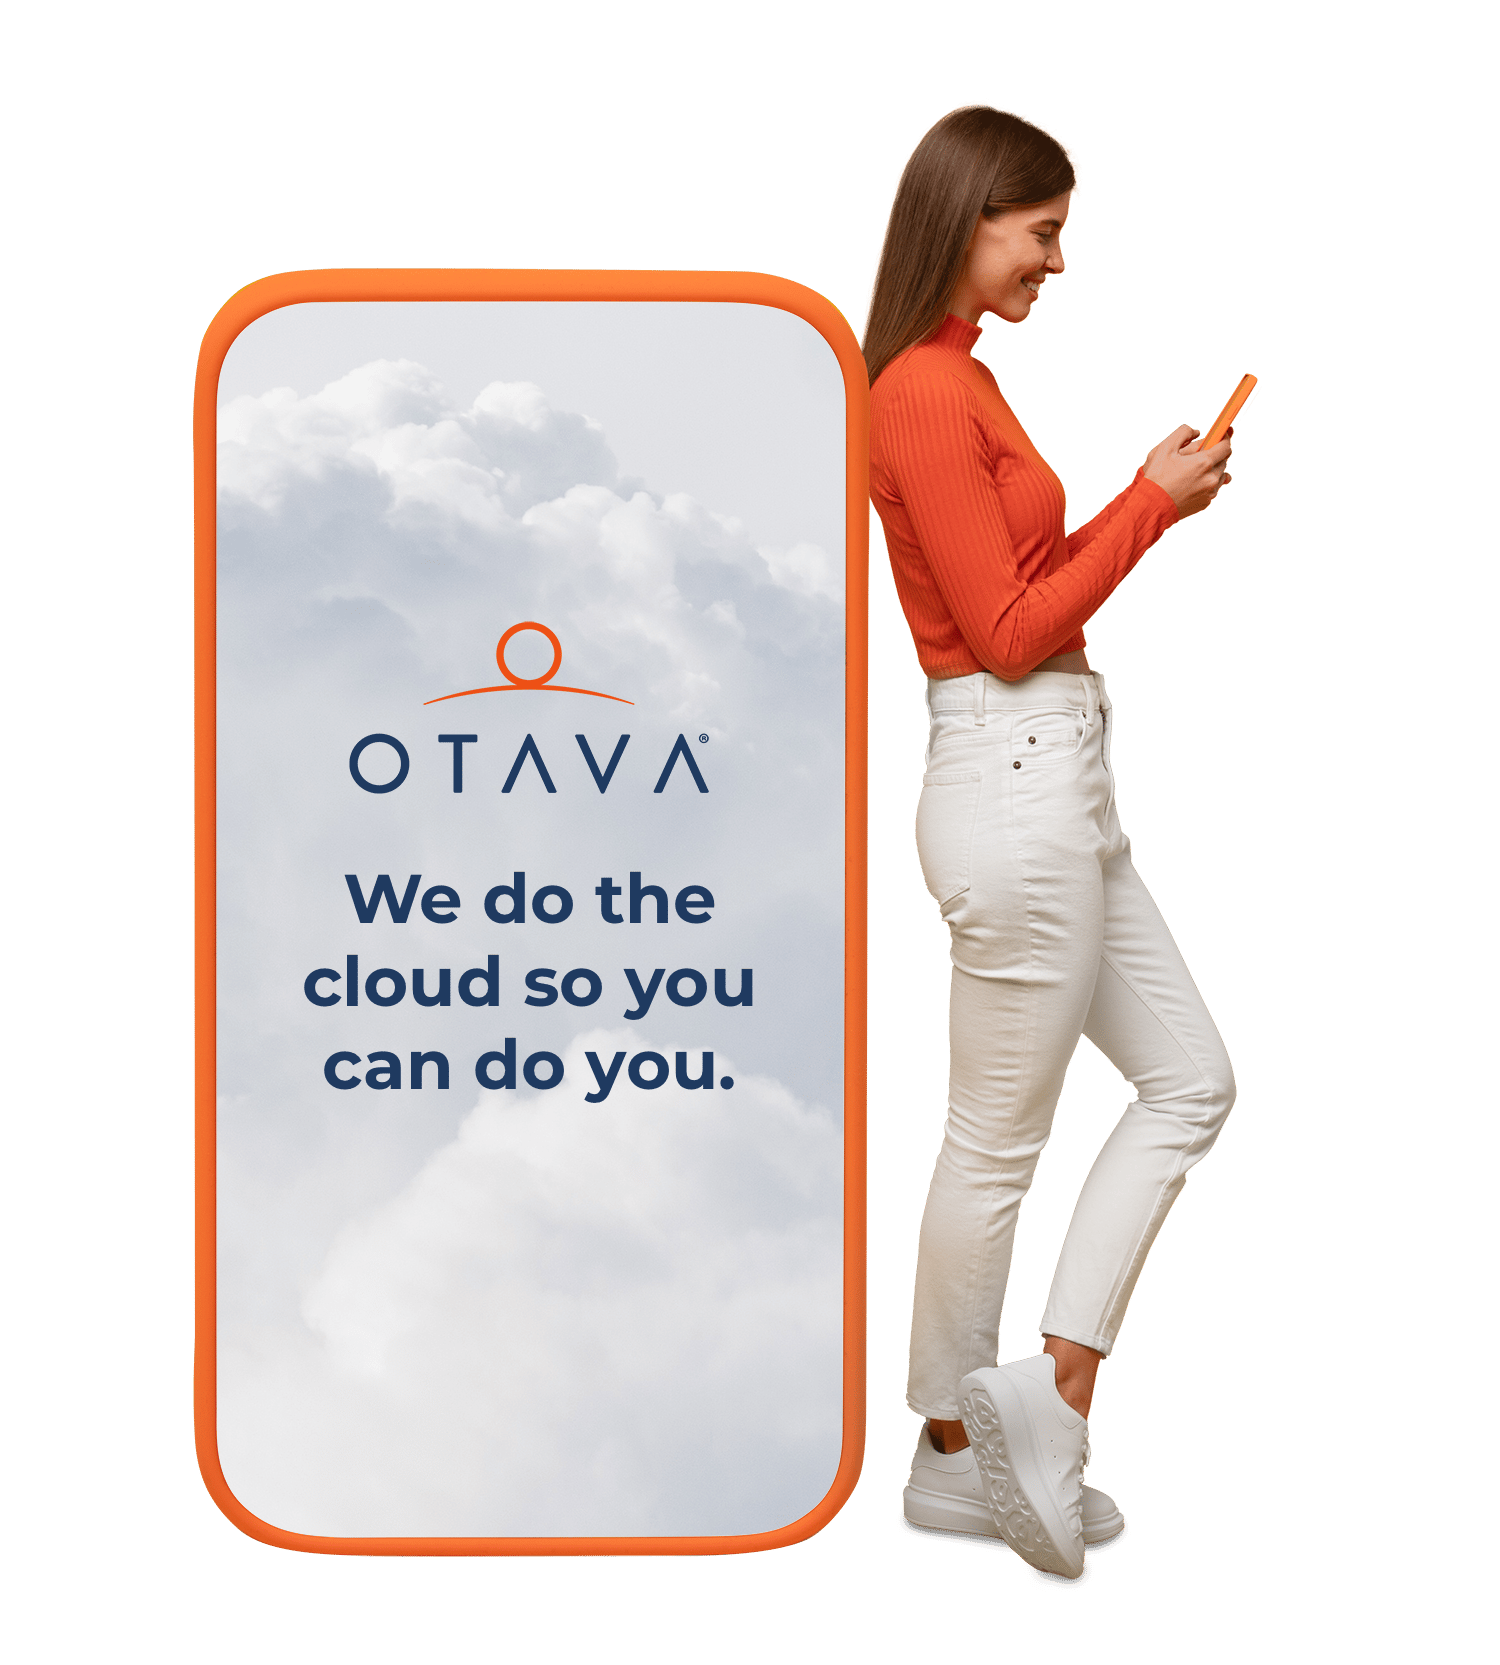 Contact a cloud solutions expert.